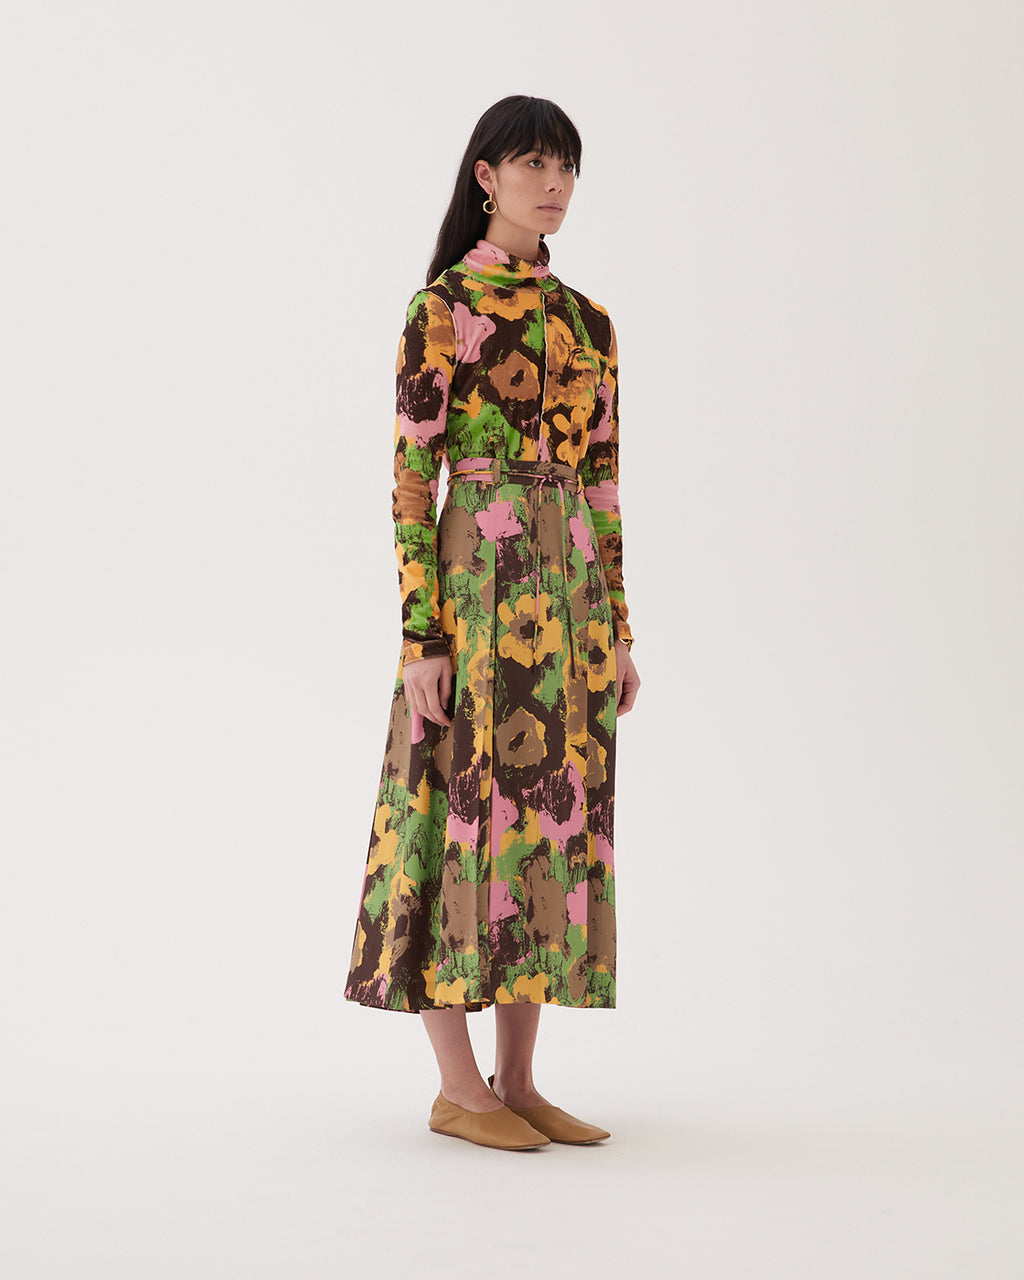 Malia Skirt Viscose Print Floral Brown